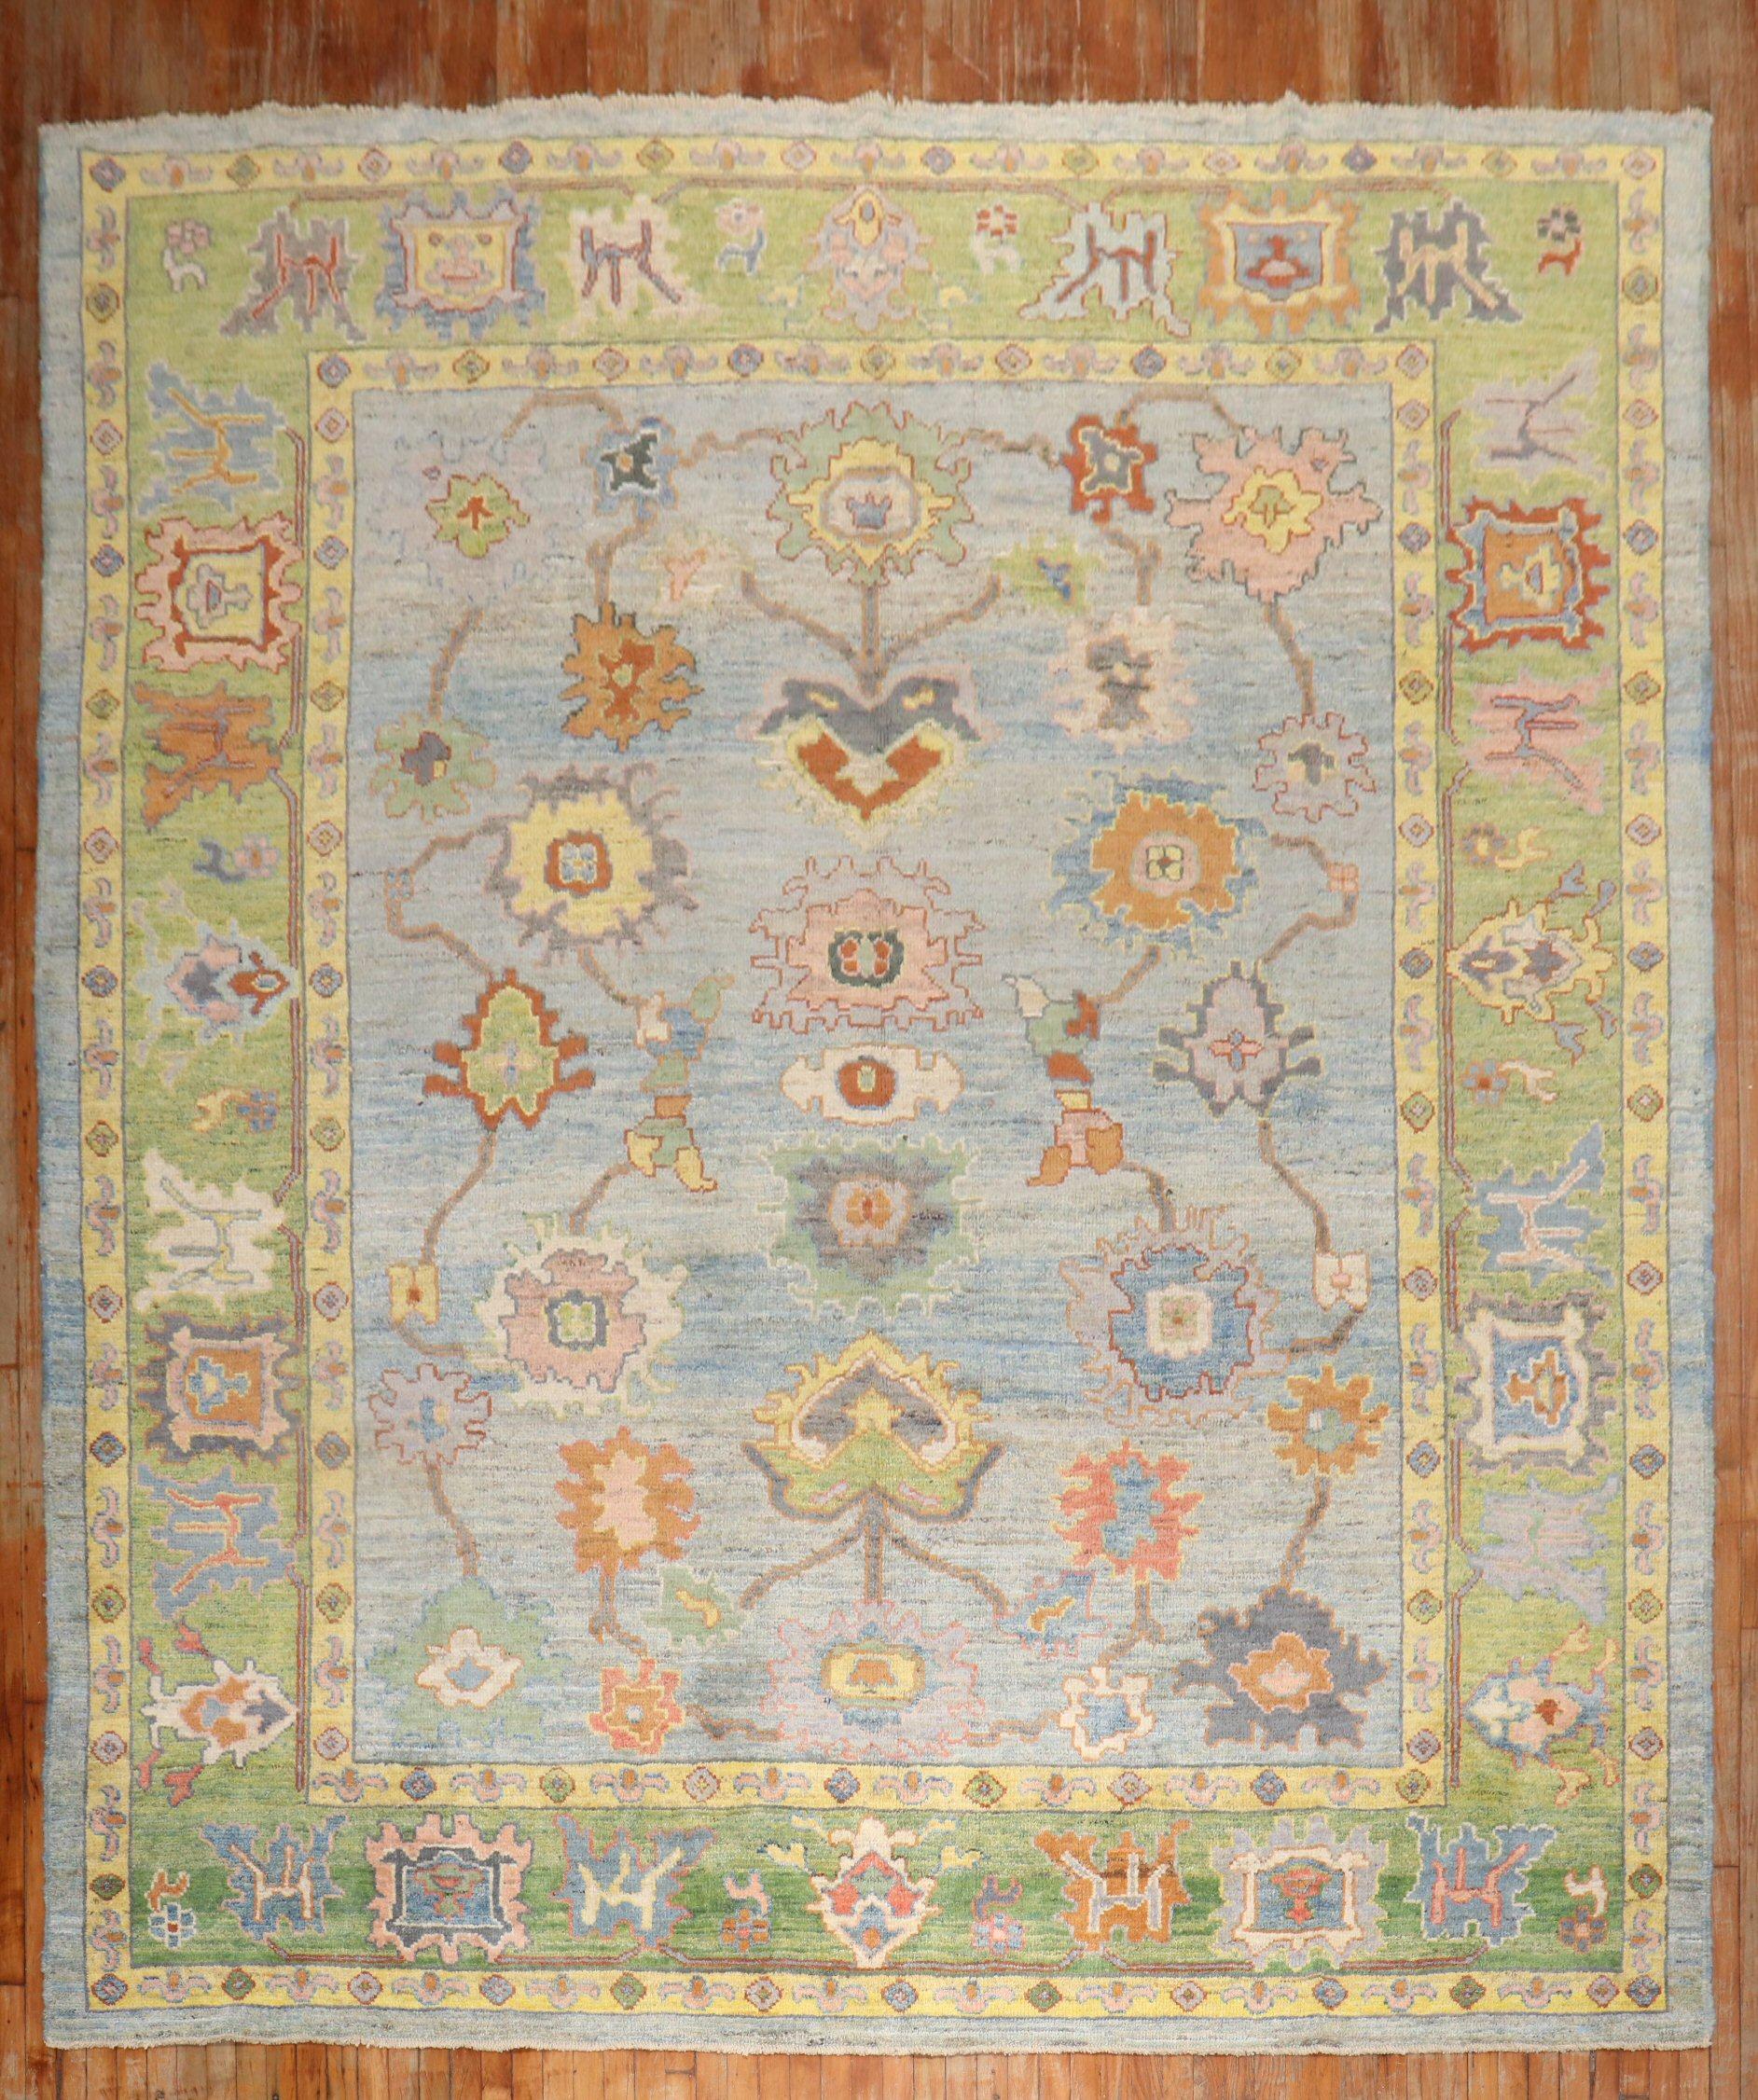 Colorful Vintage Room Size Inspired Vintage Turkish Oushak Carpet (en anglais)

10'4'' x 13'7''